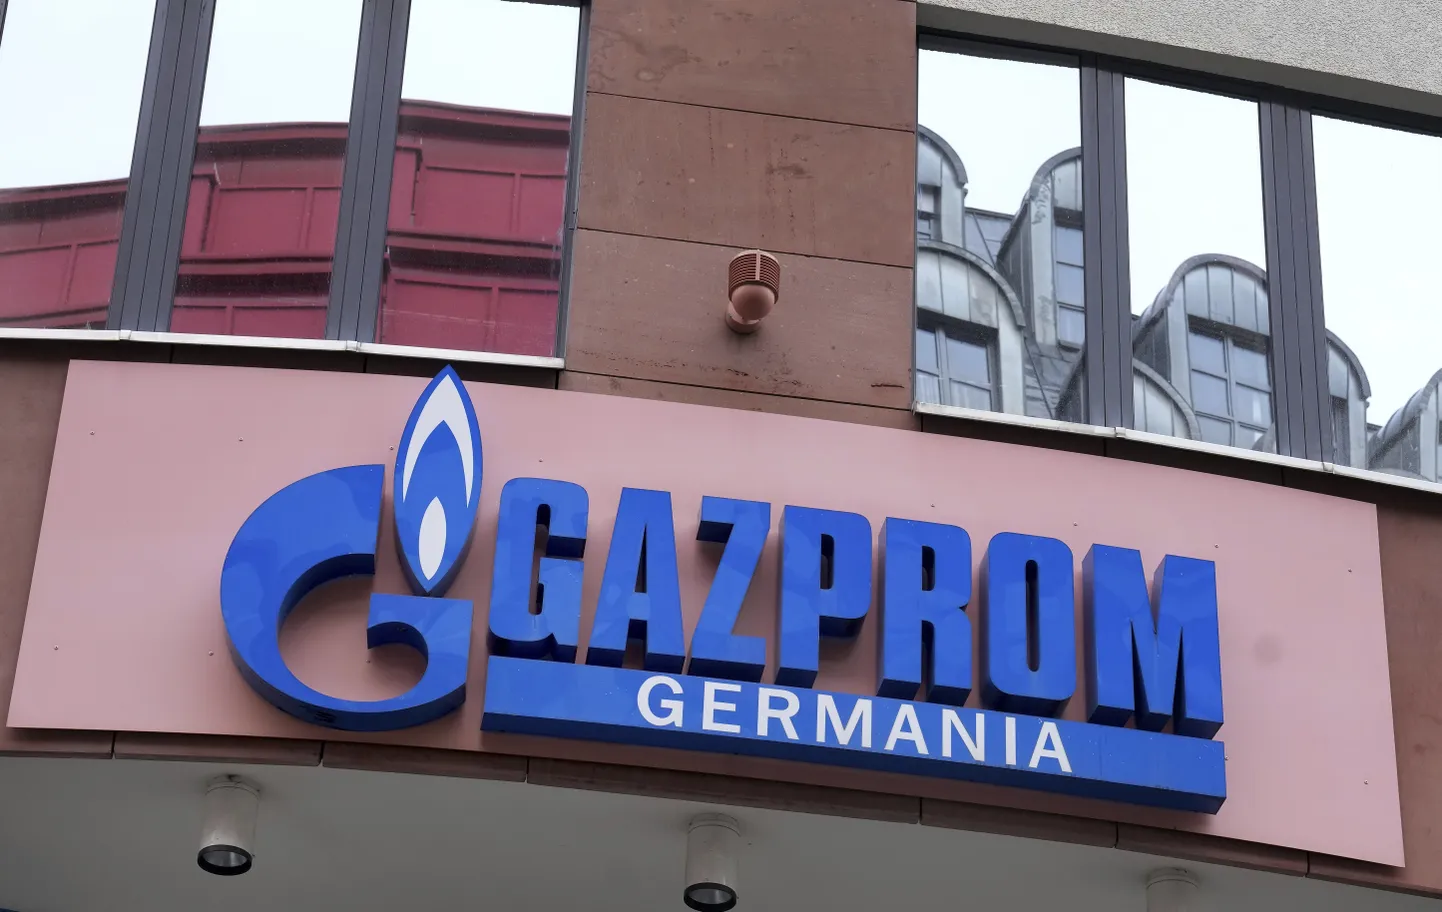 Gazprom Germania.